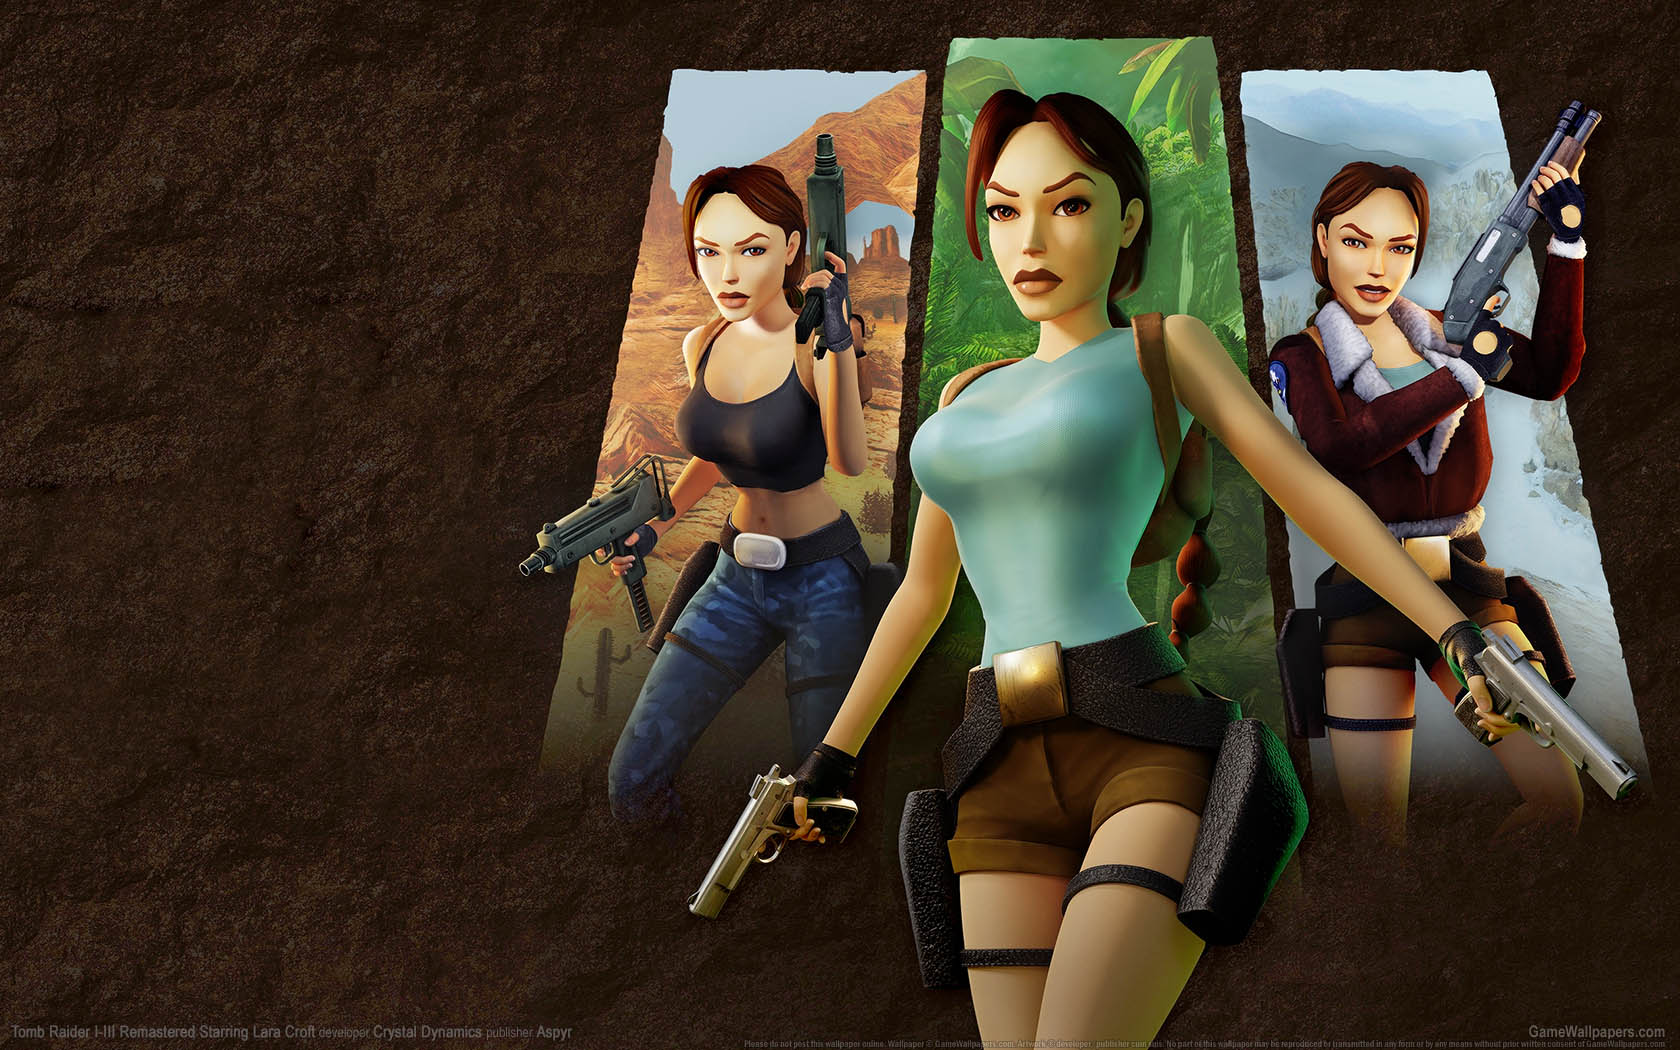 Tomb Raider I-III Remastered Starring Lara Croft fondo de escritorio 01 1680x1050